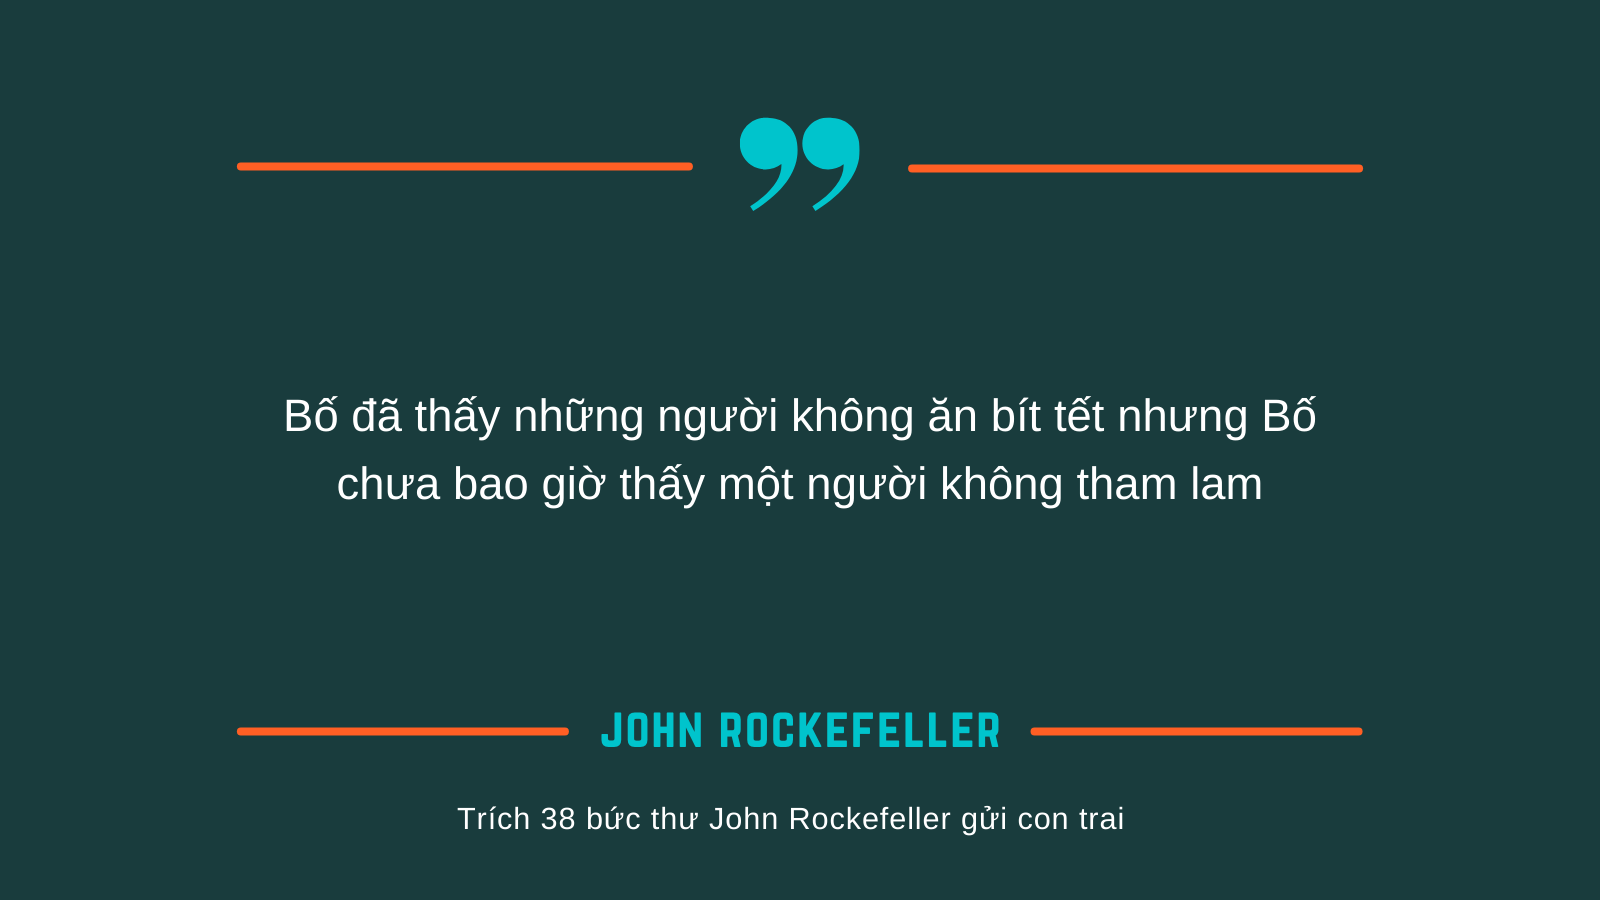 38 buc thu gui con trai cua John Rockefeller 14